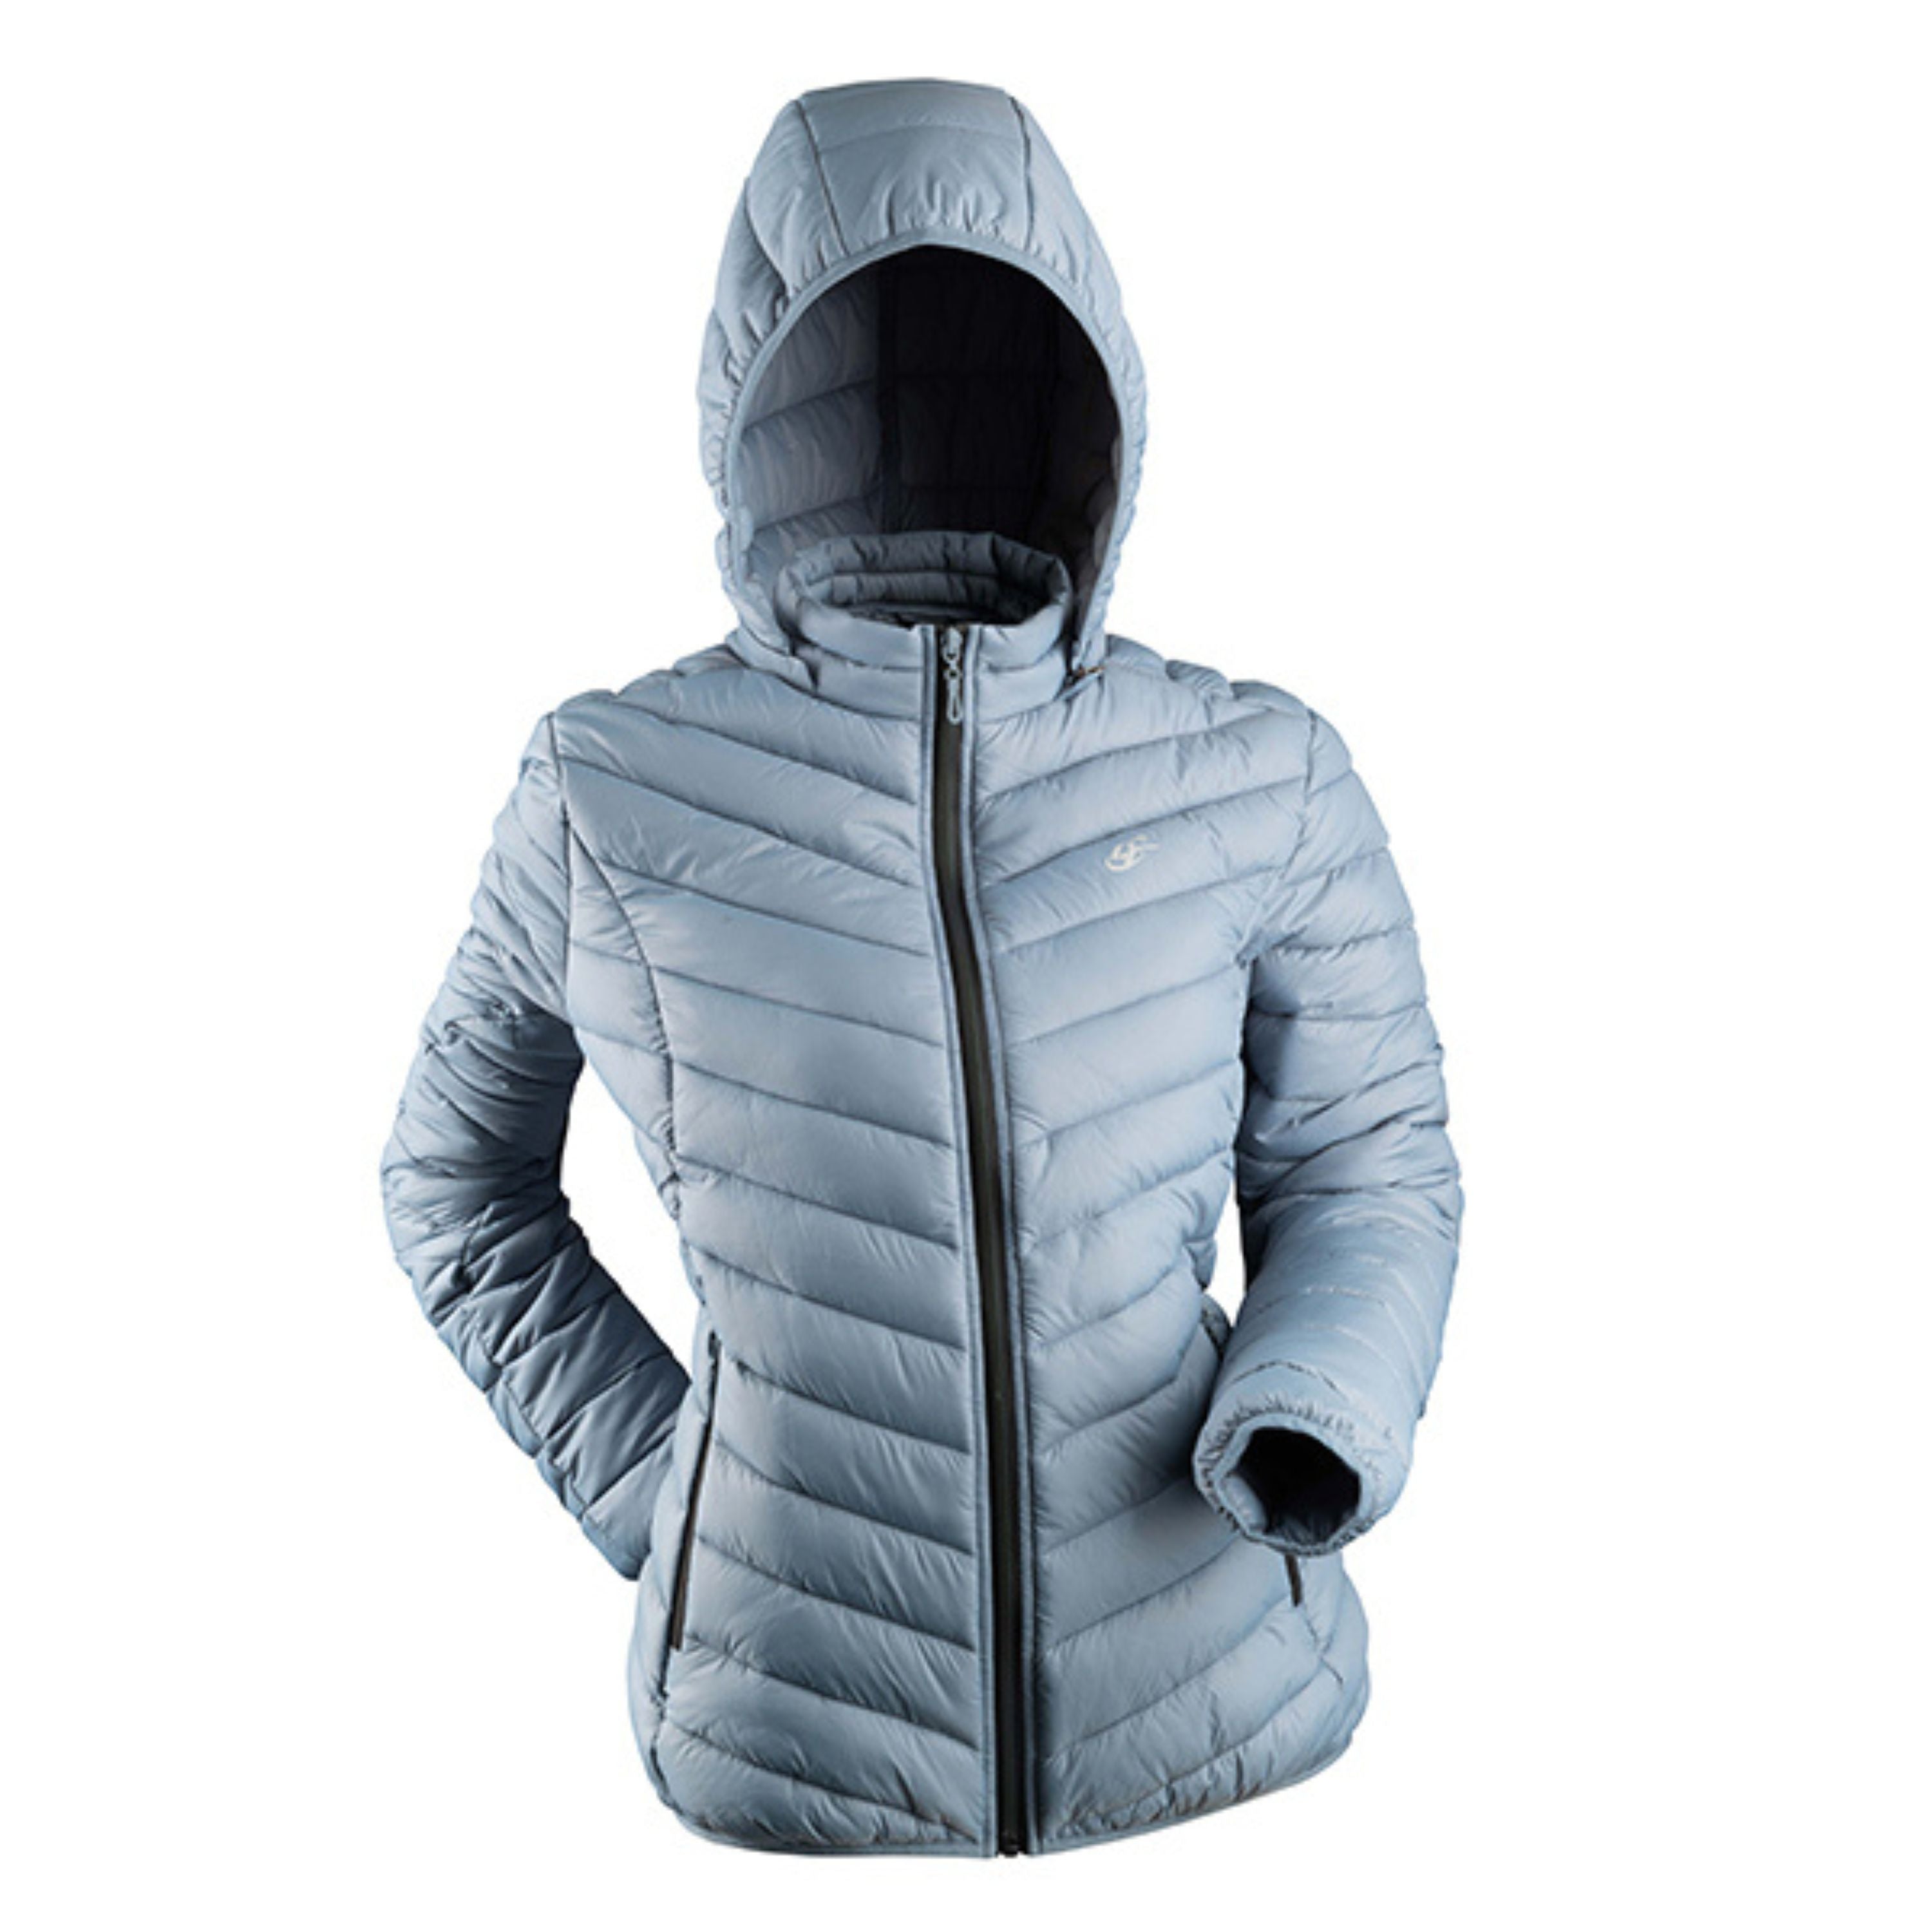 "Travelex" Insulated jacket with hood- Women's